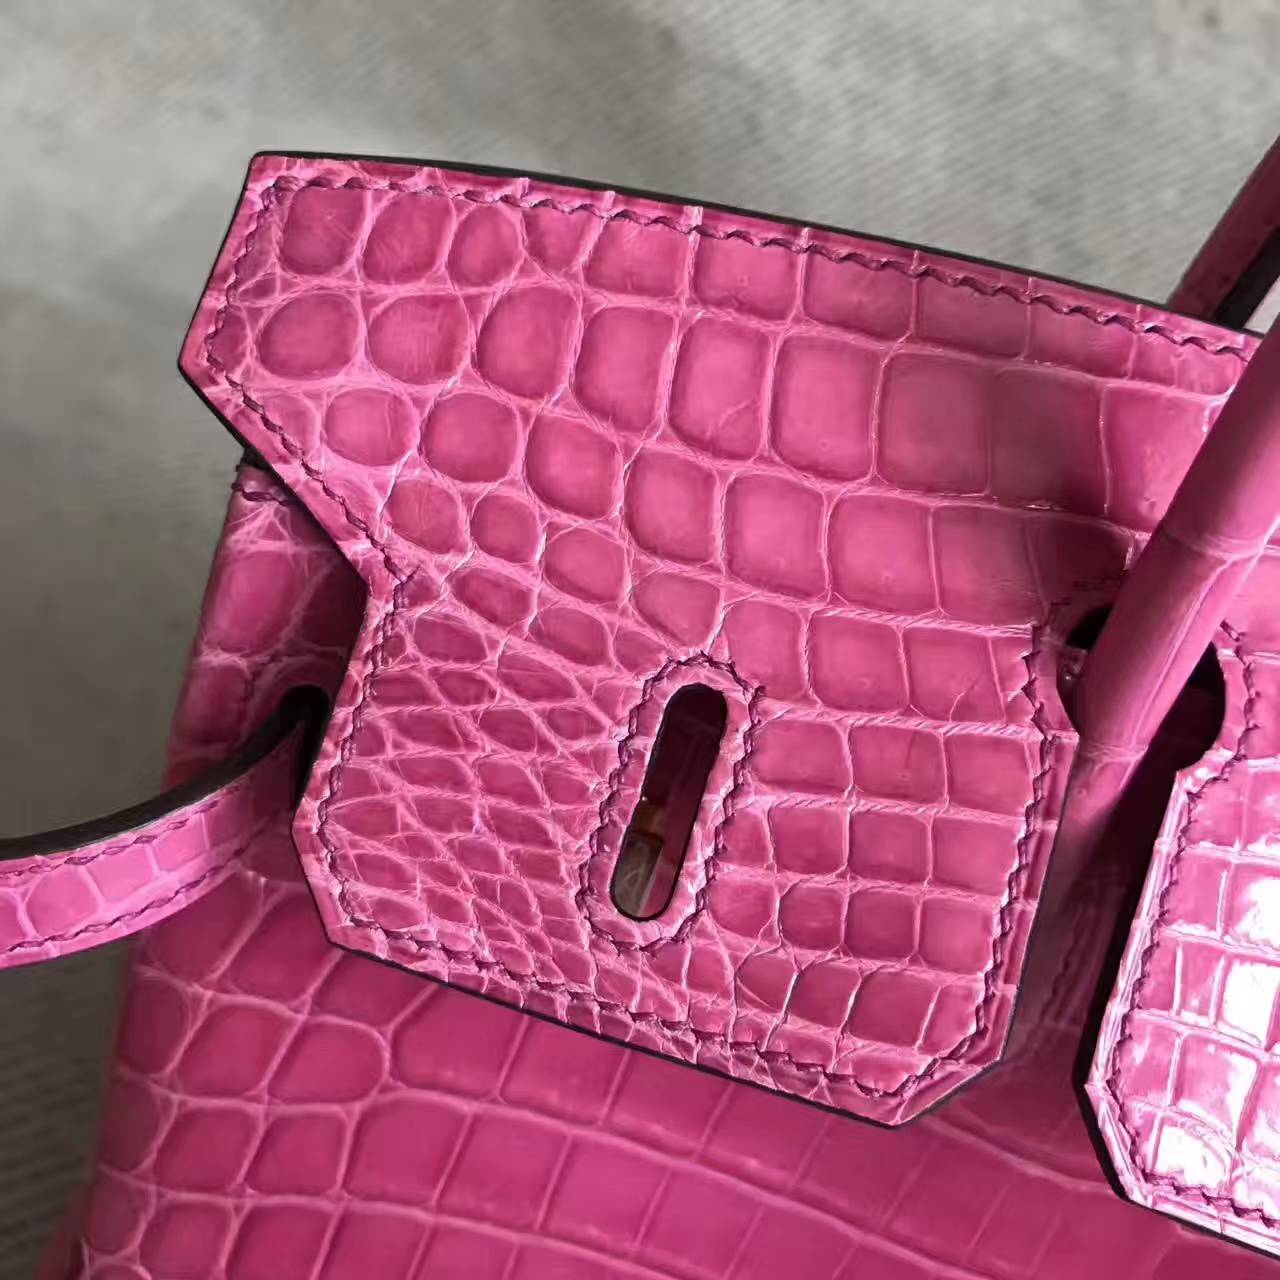 Luxury Hermes Shiny Crocodile Leather Birkin Bag 25cm in 5E Hot Pink